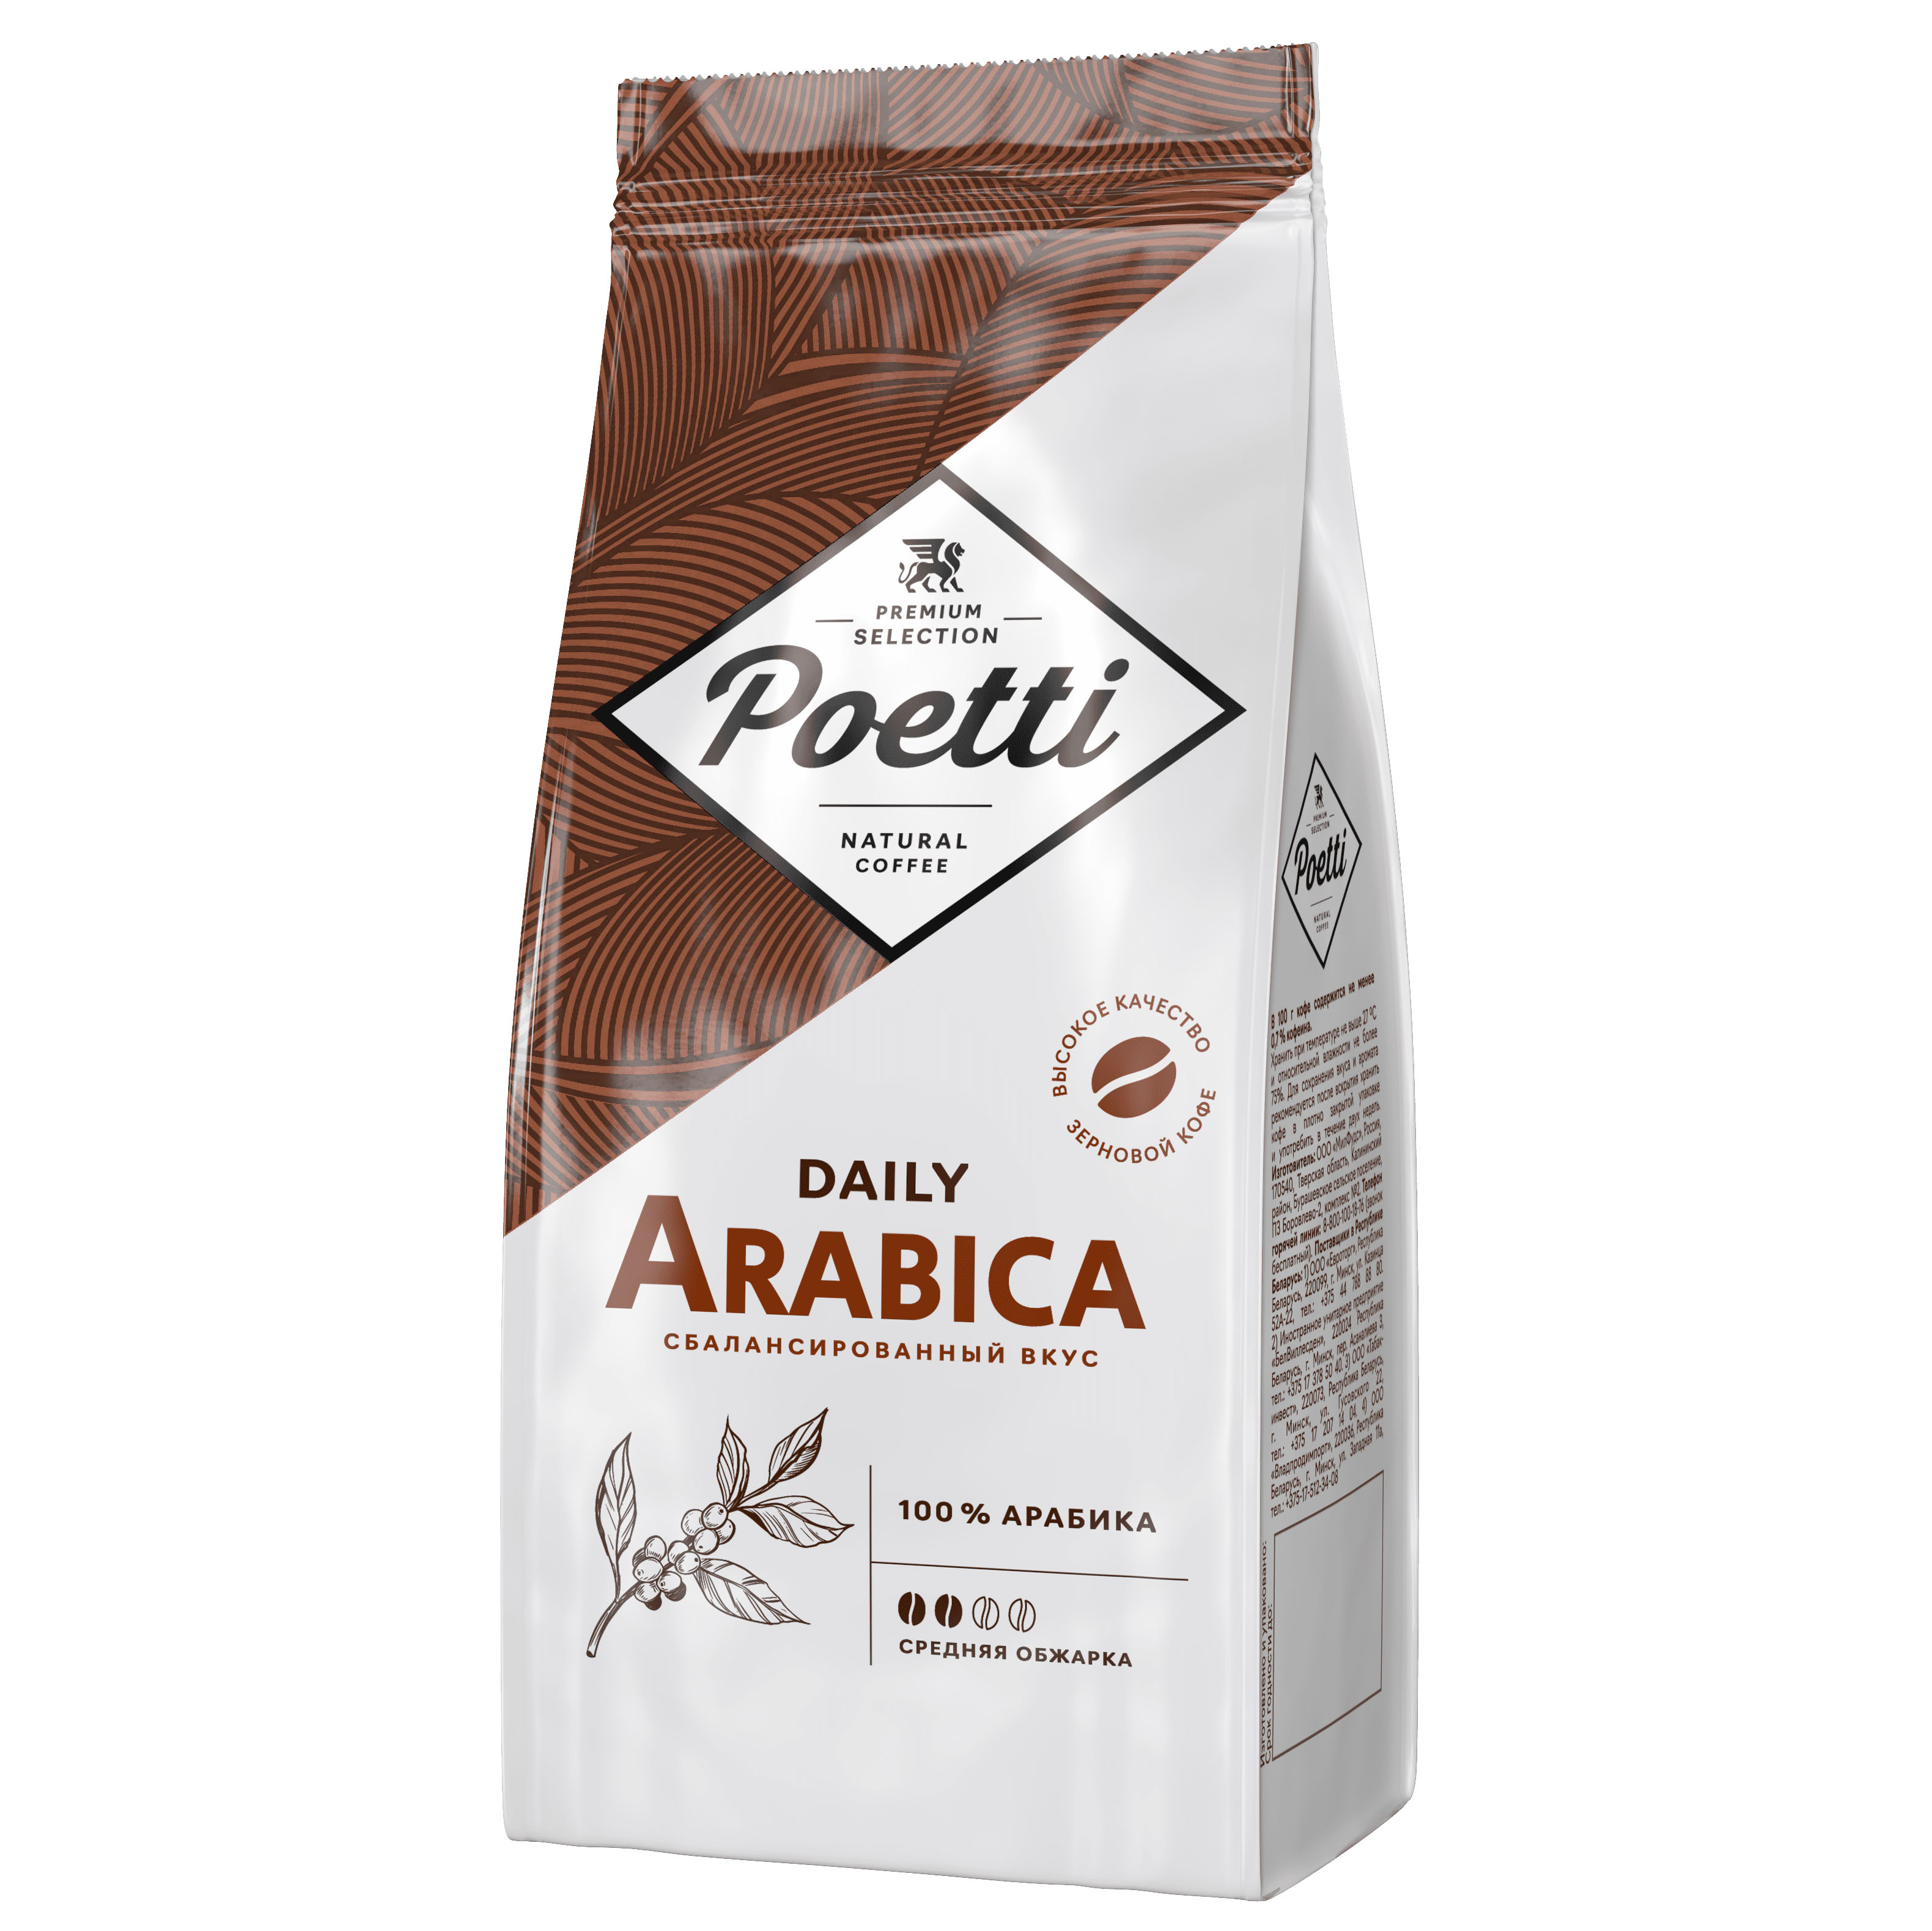 Кофе в зернах Poetti Arabica 250 г кофе в зернах caffe vergnano arabica 100% 250 г